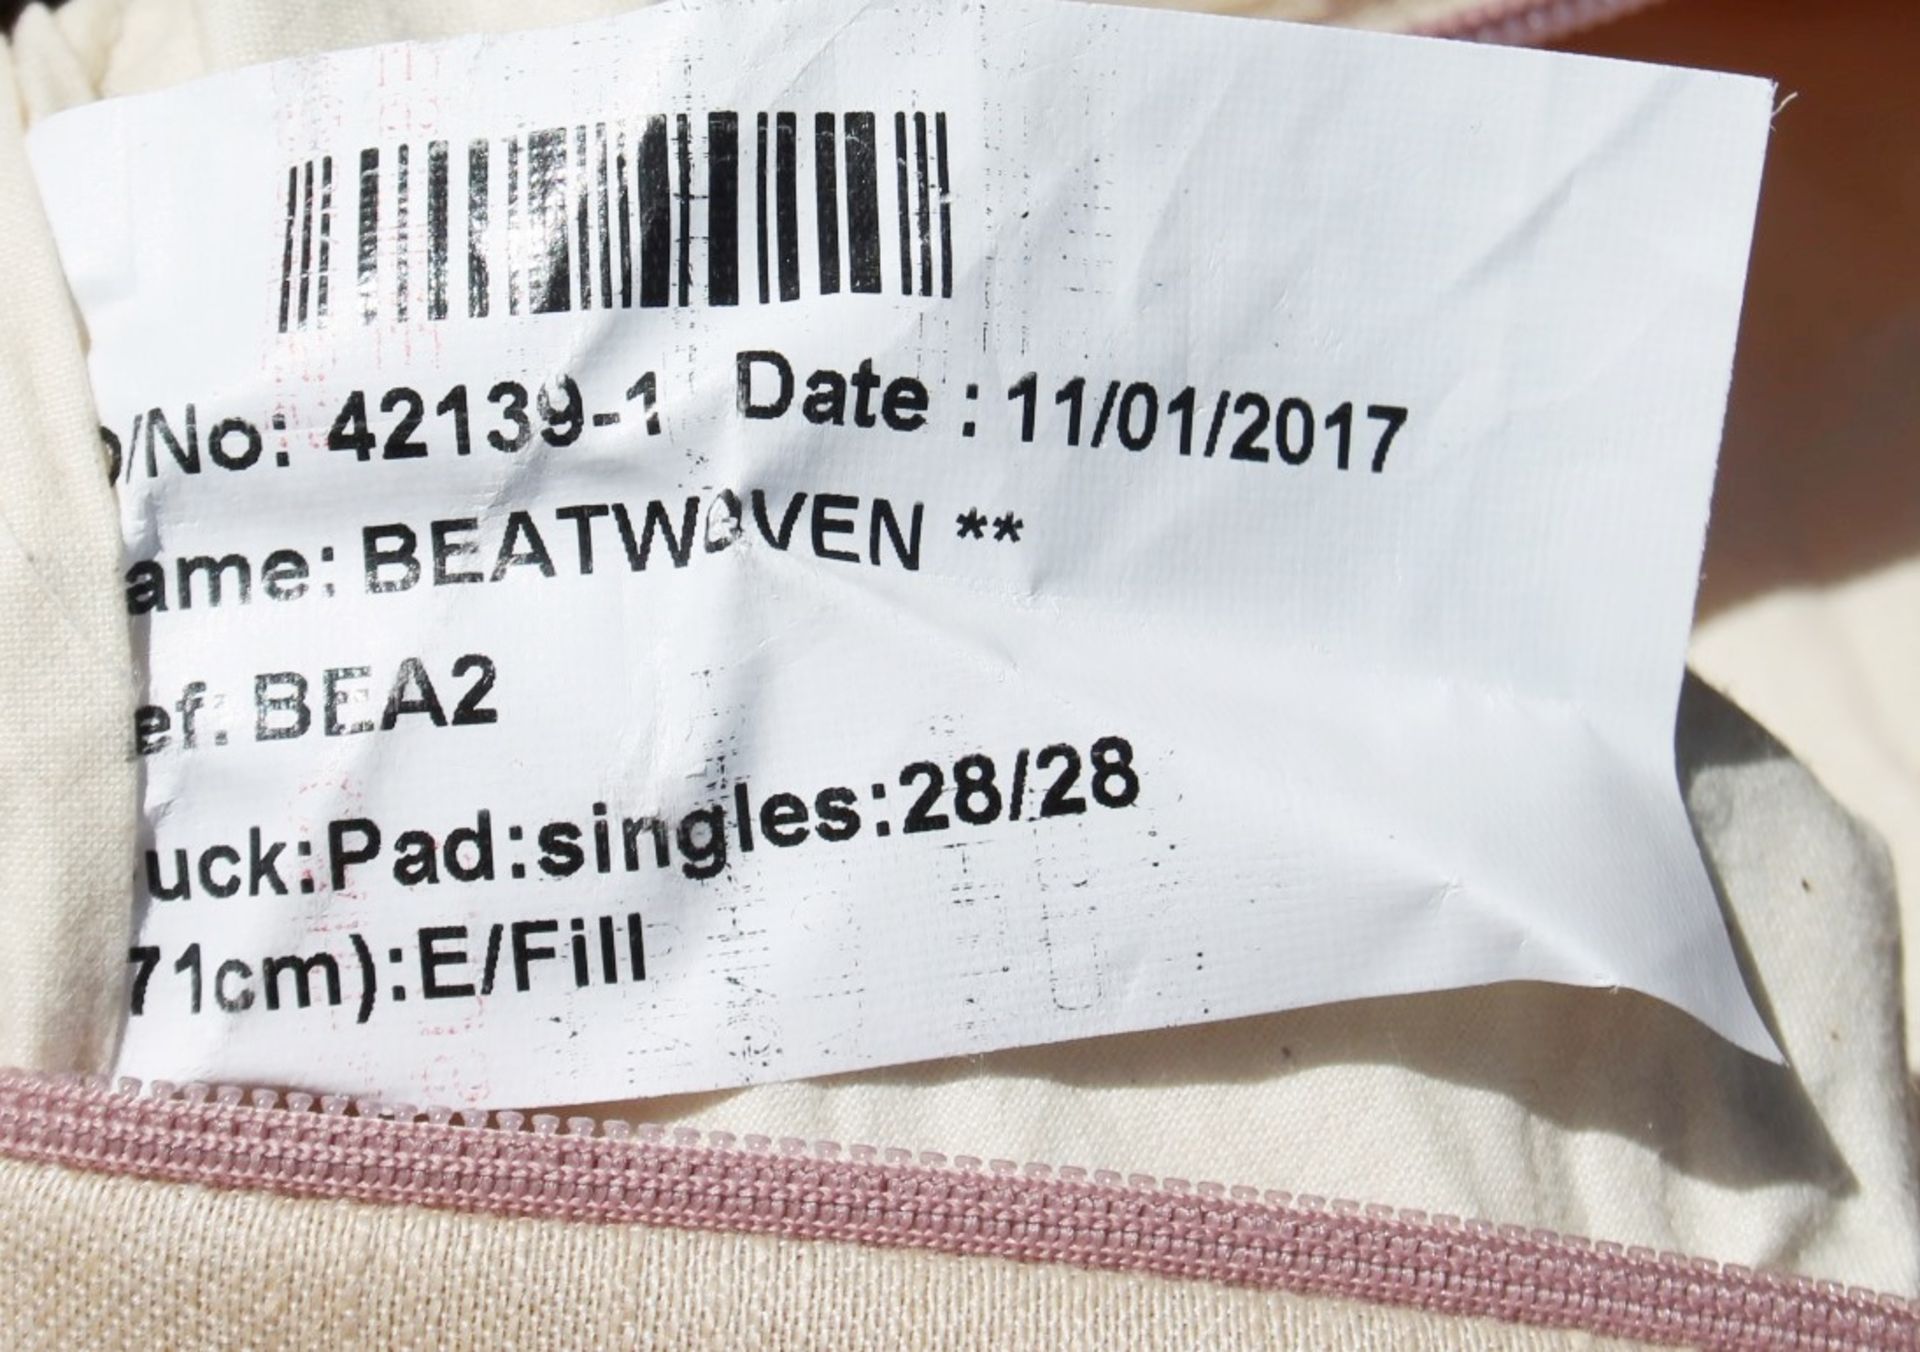 1 x BEATWOVEN 'Adage' Designer Large Weaved Silk Cushion - Original Price £295.00 - Ref: 5536778/ - Image 4 of 6